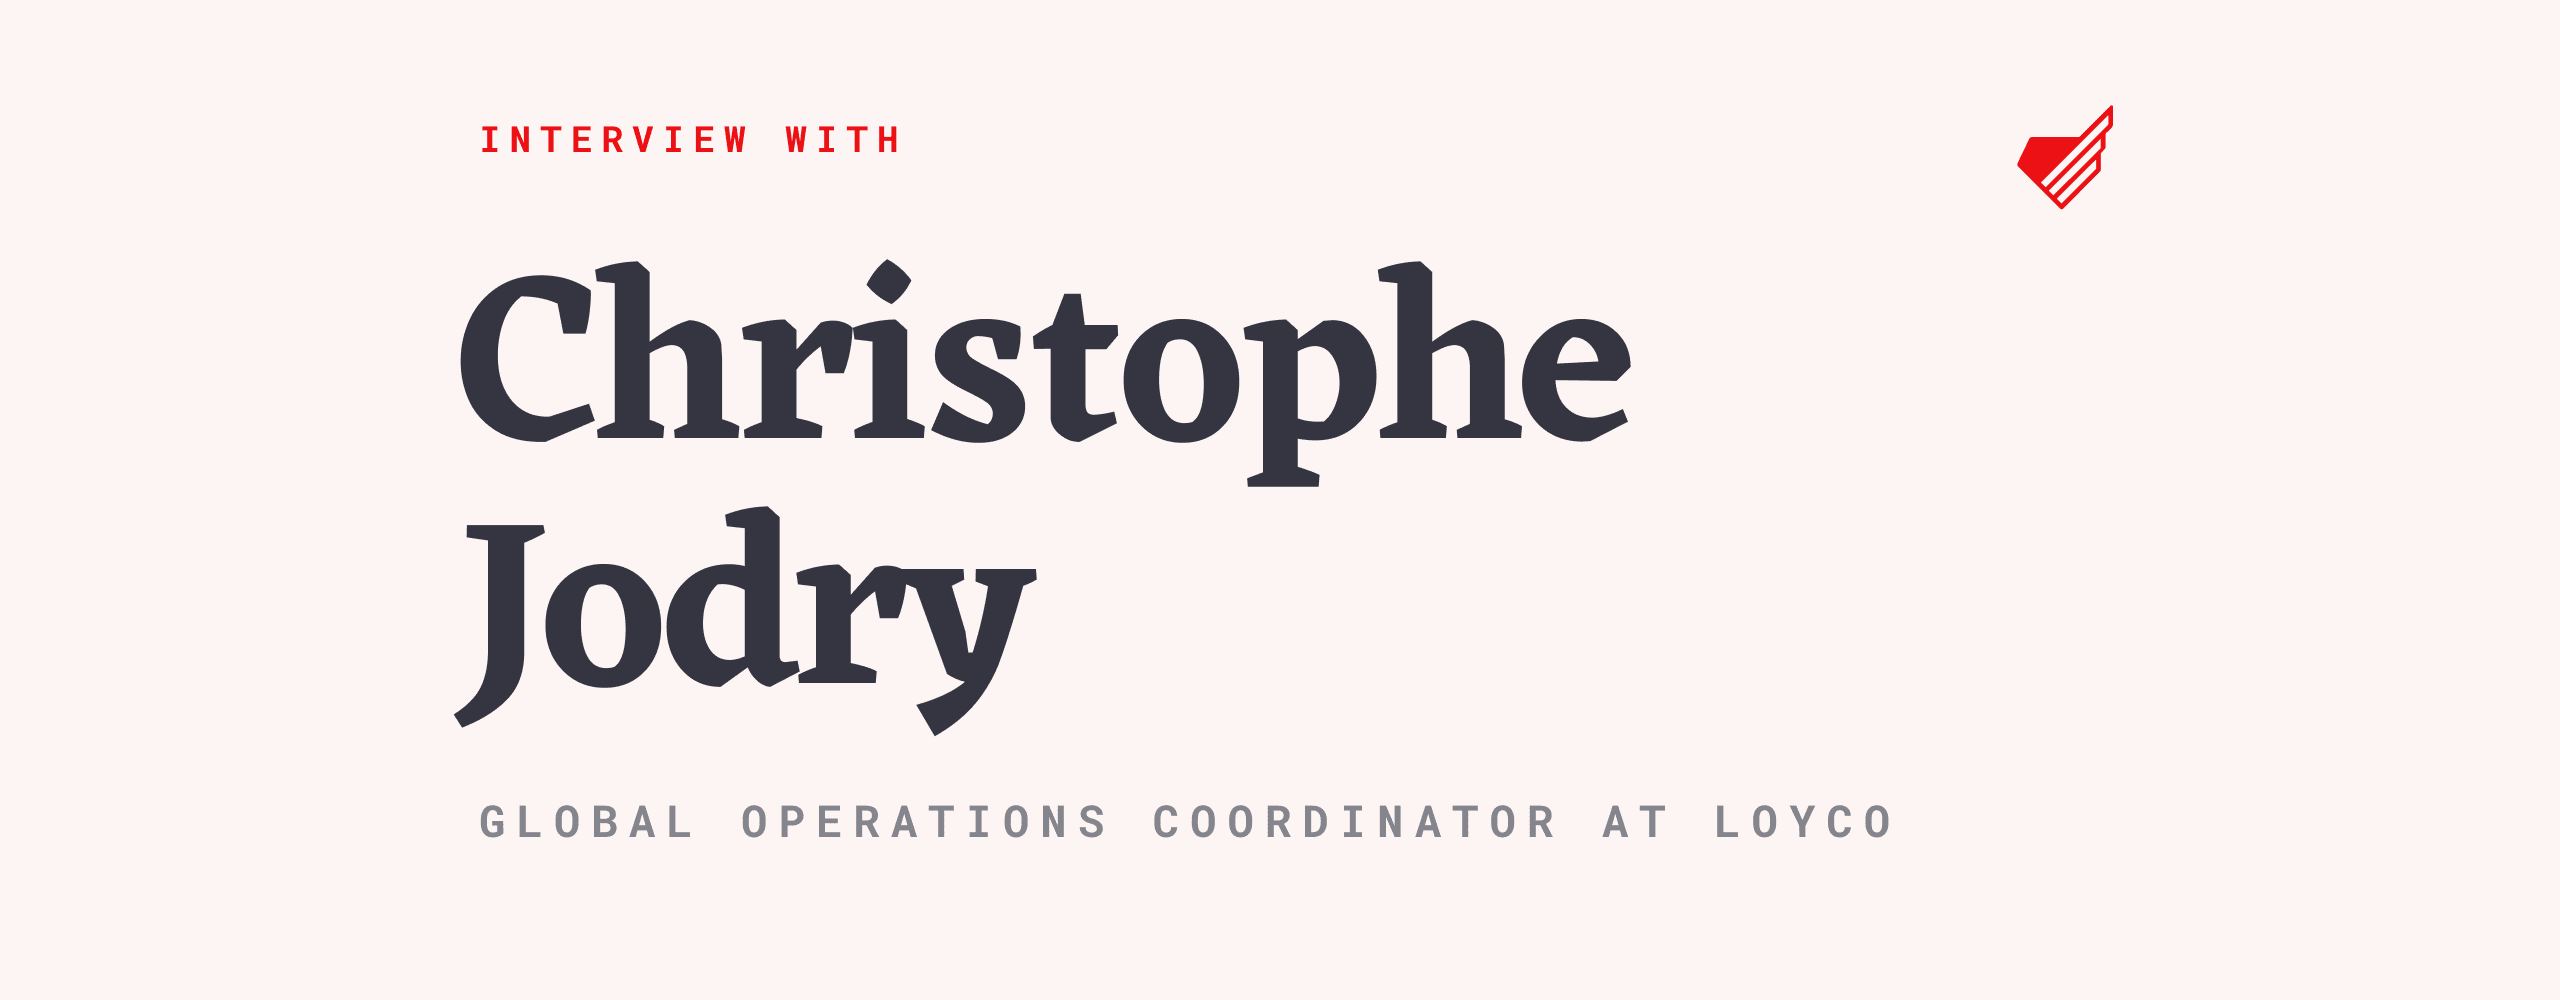 christophe-jodry-loyco-interview-hs